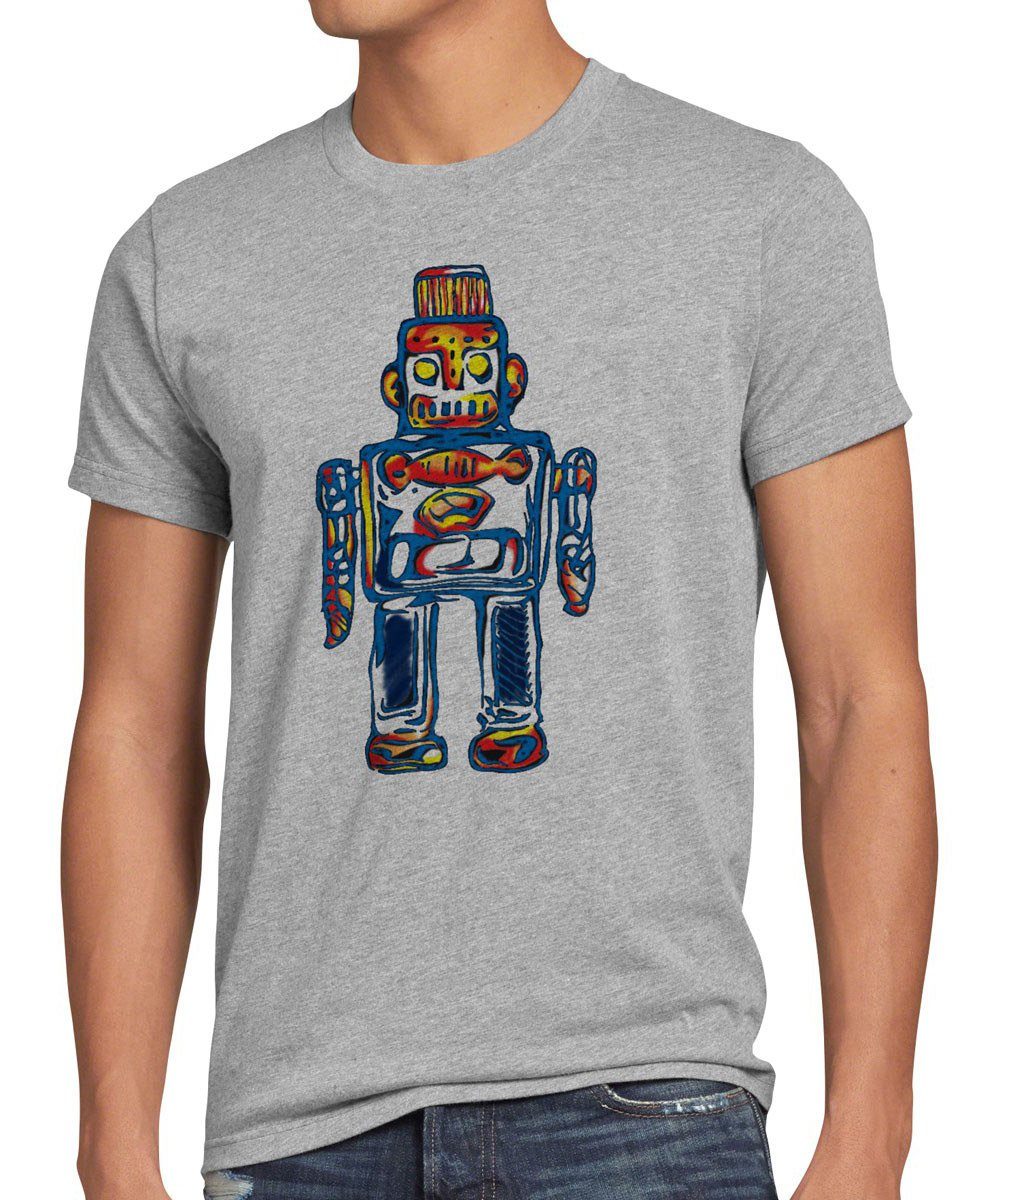 style3 Print-Shirt Herren T-Shirt Sheldon Toy Robot big bang cooper tbbt Roboter spielzeug Leonard grau meliert